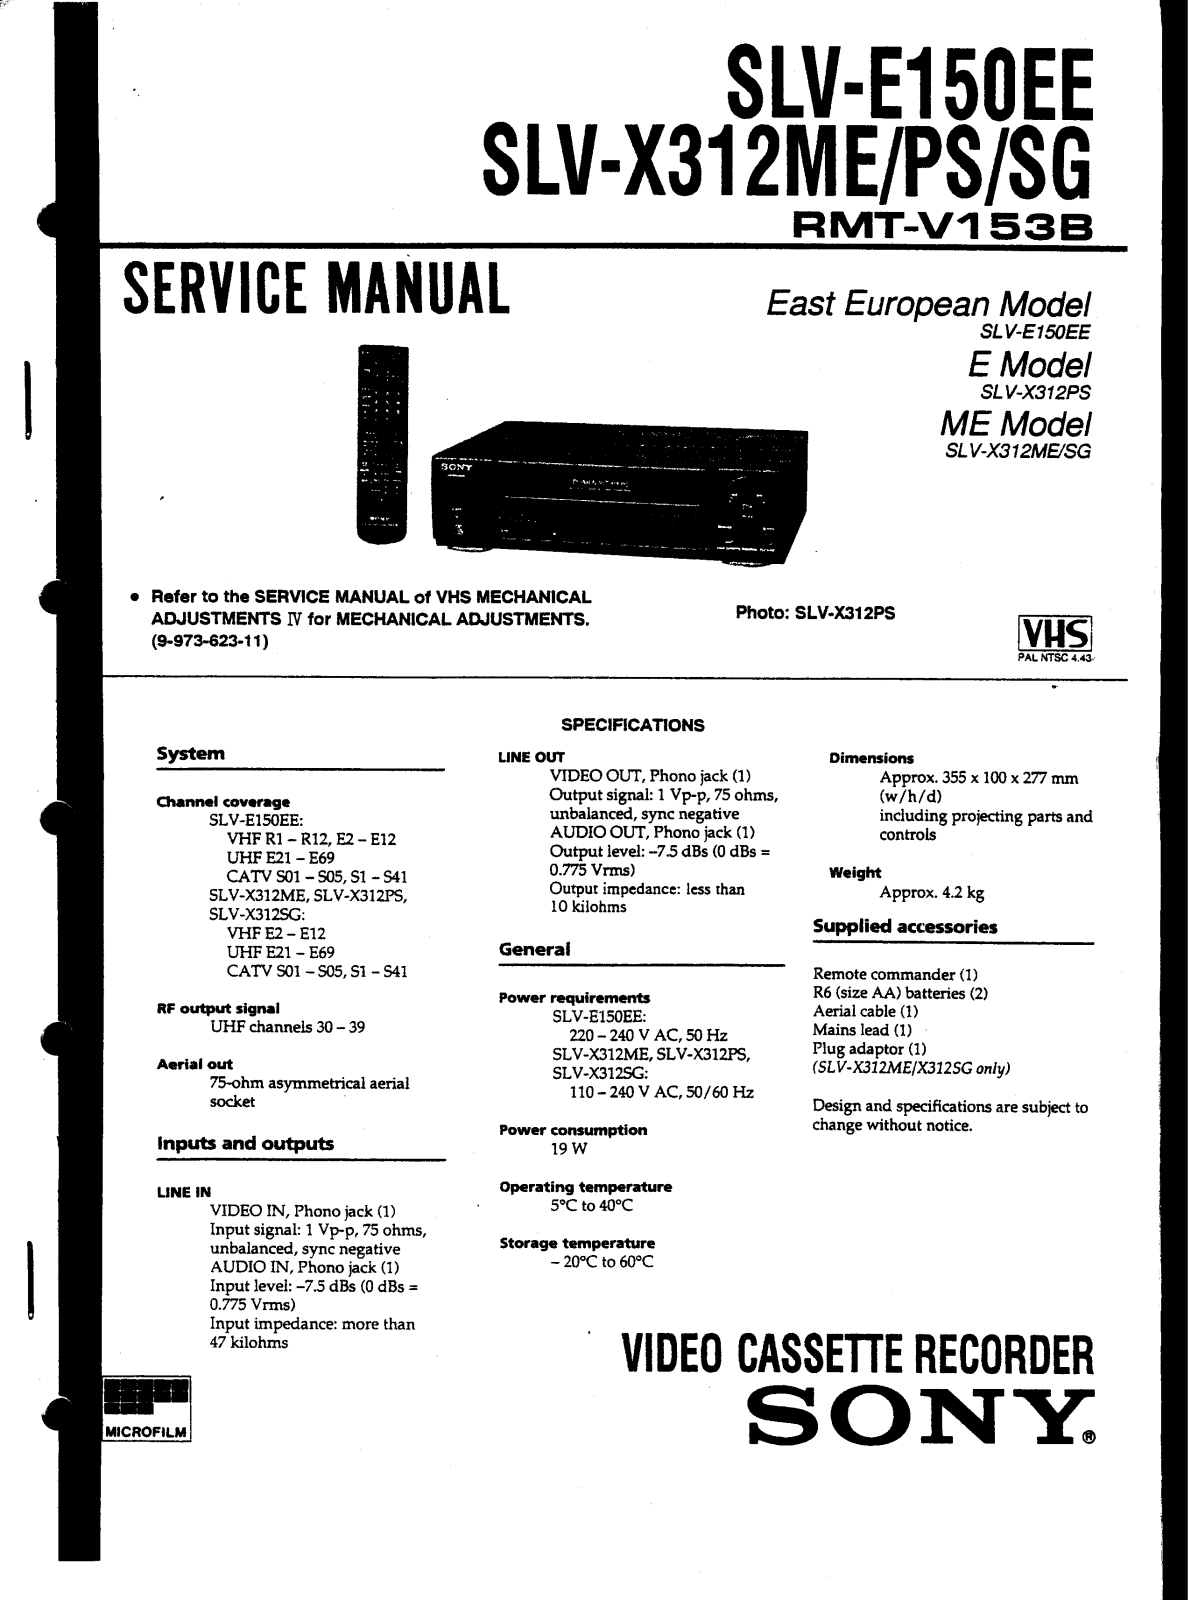 Sony SLVE-150-EE Service manual